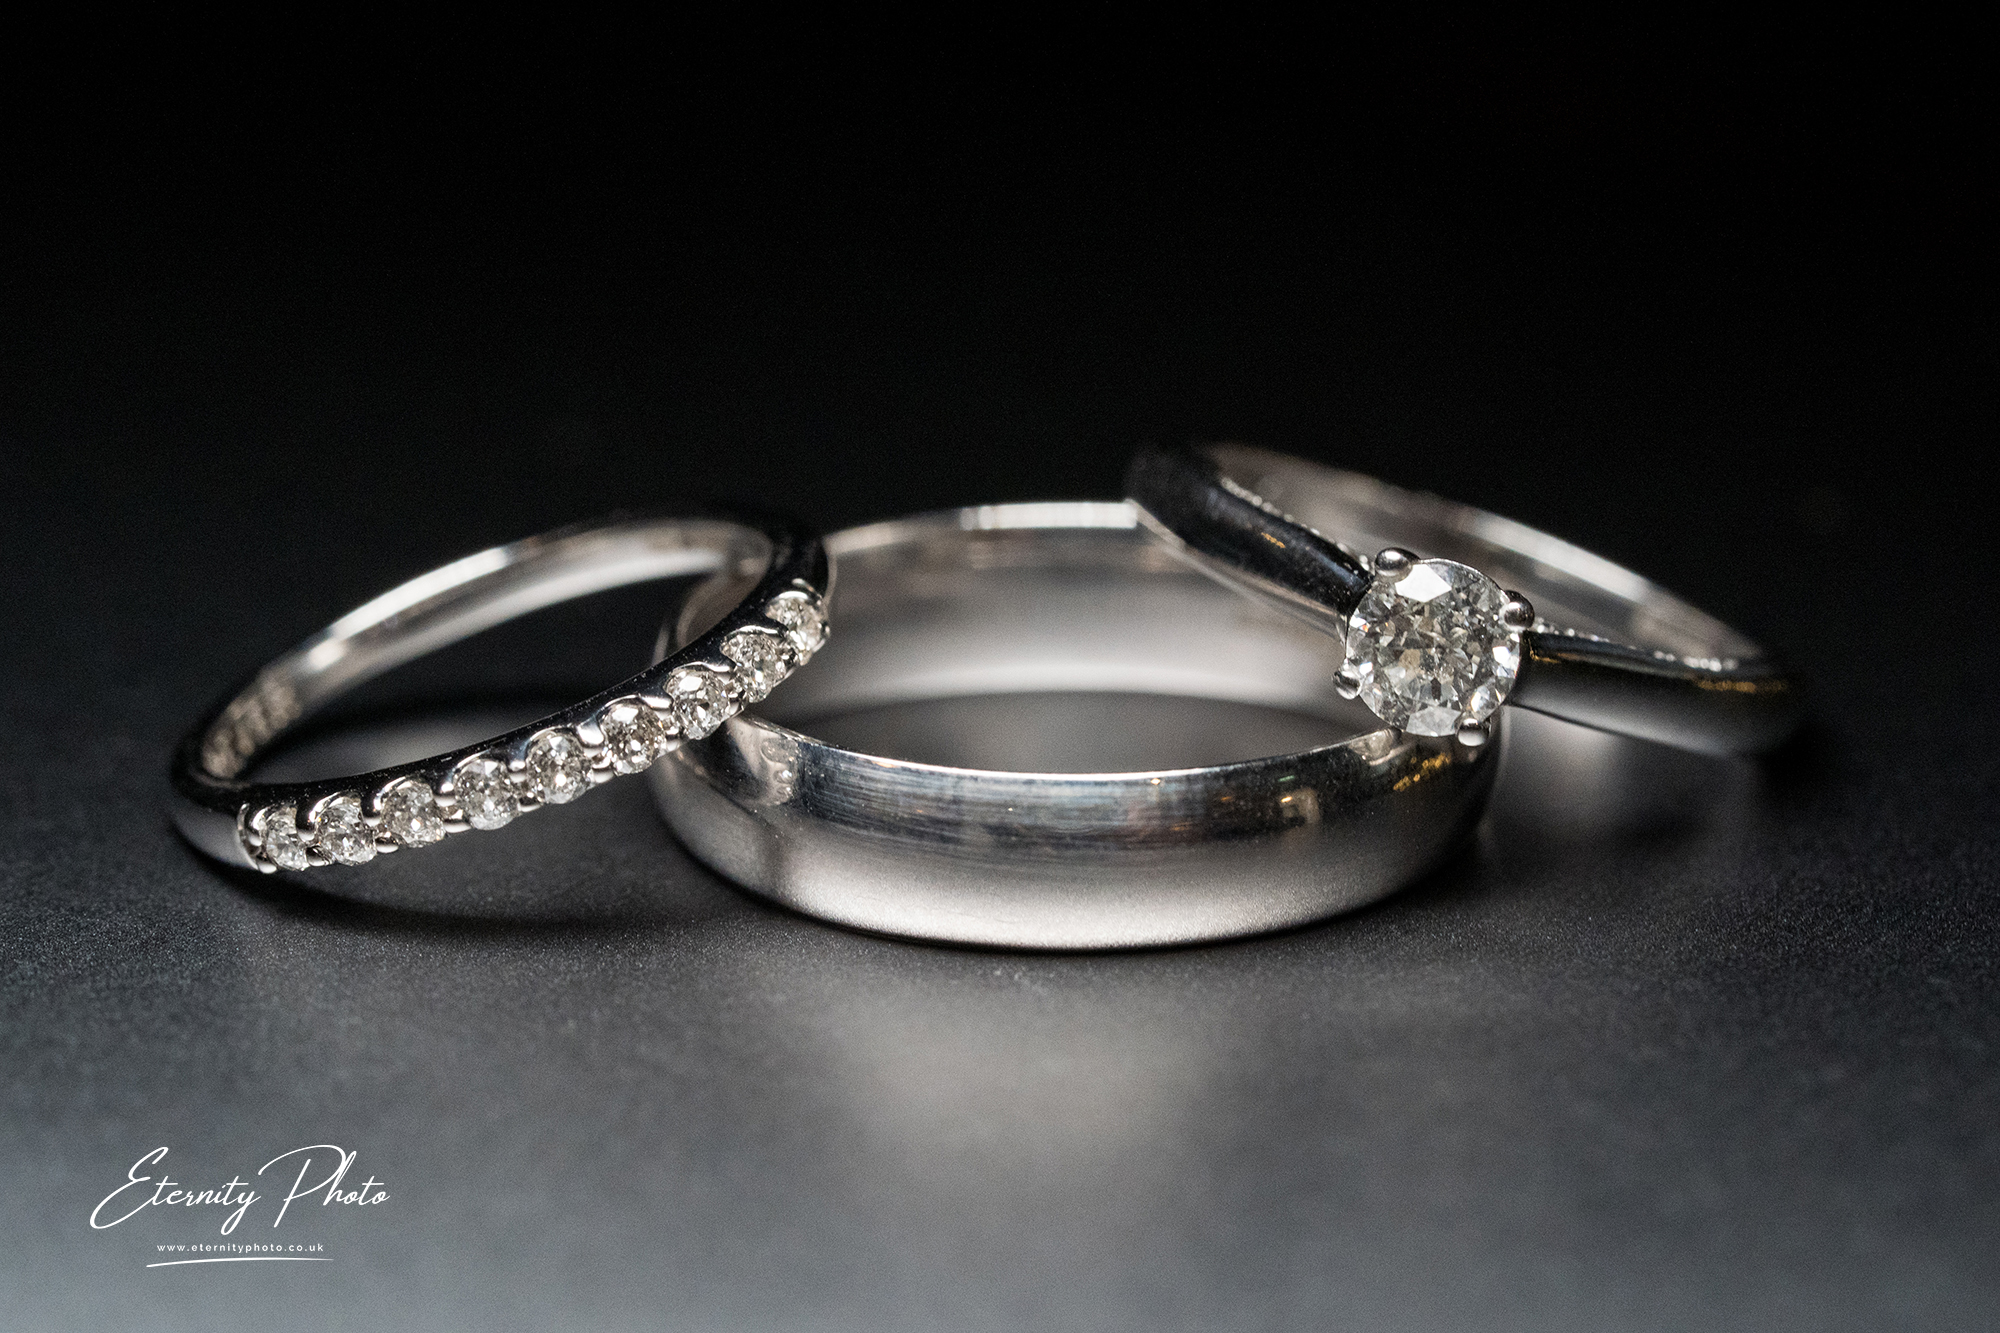 Diamond engagement and wedding rings on dark background.